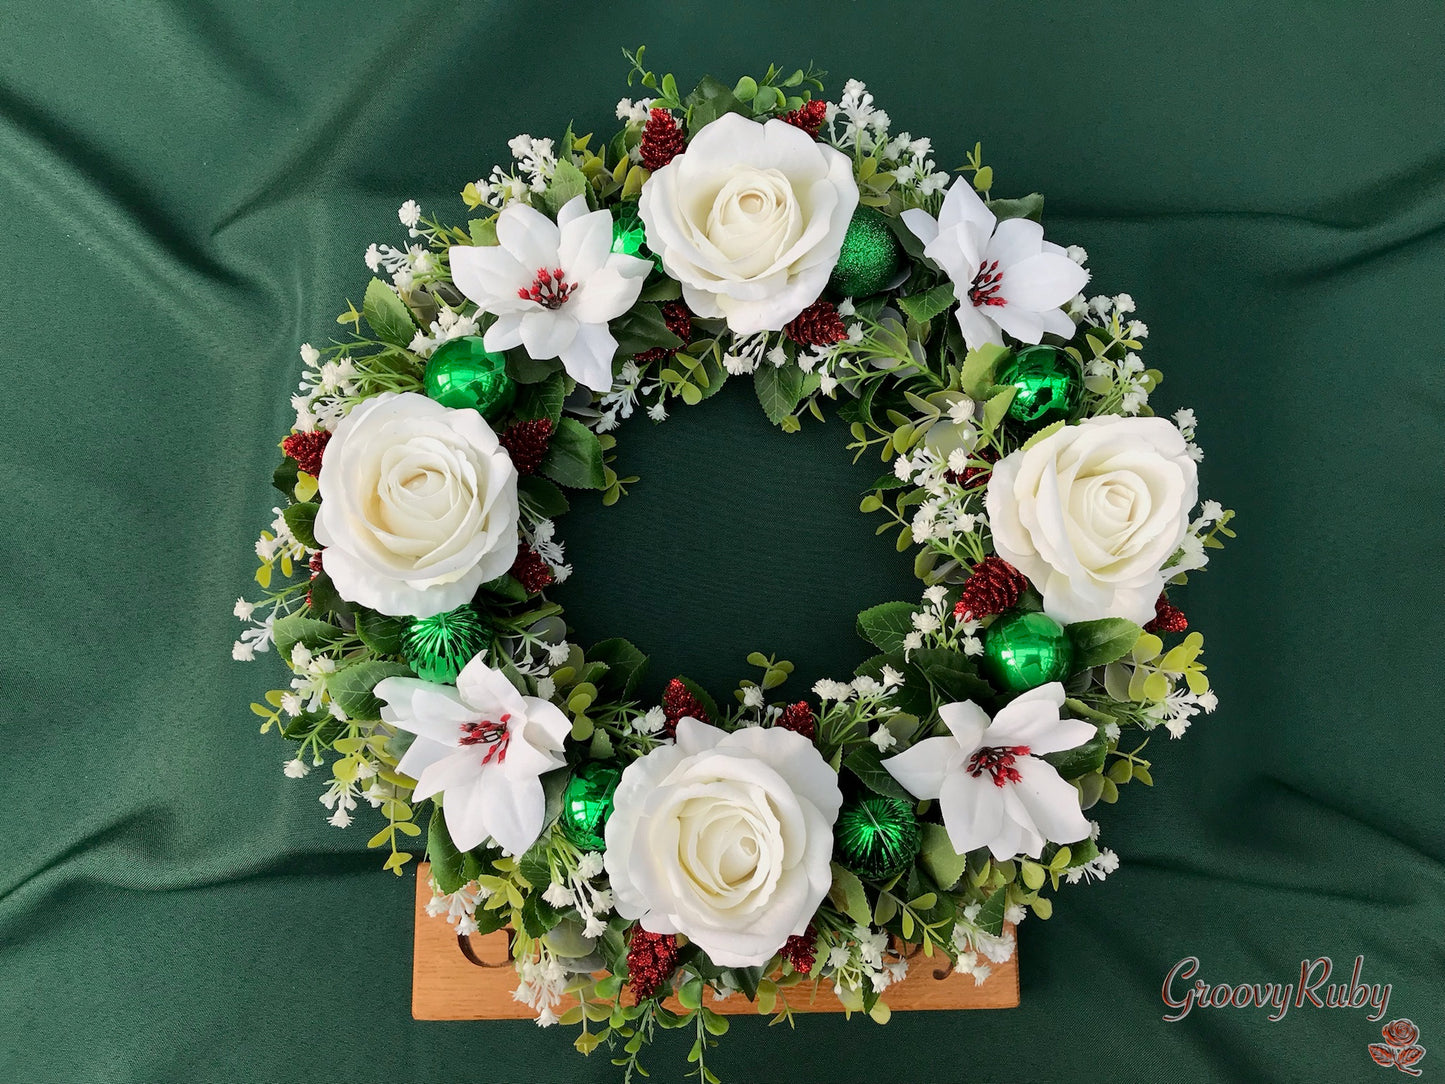 Season's Greetings Wreath